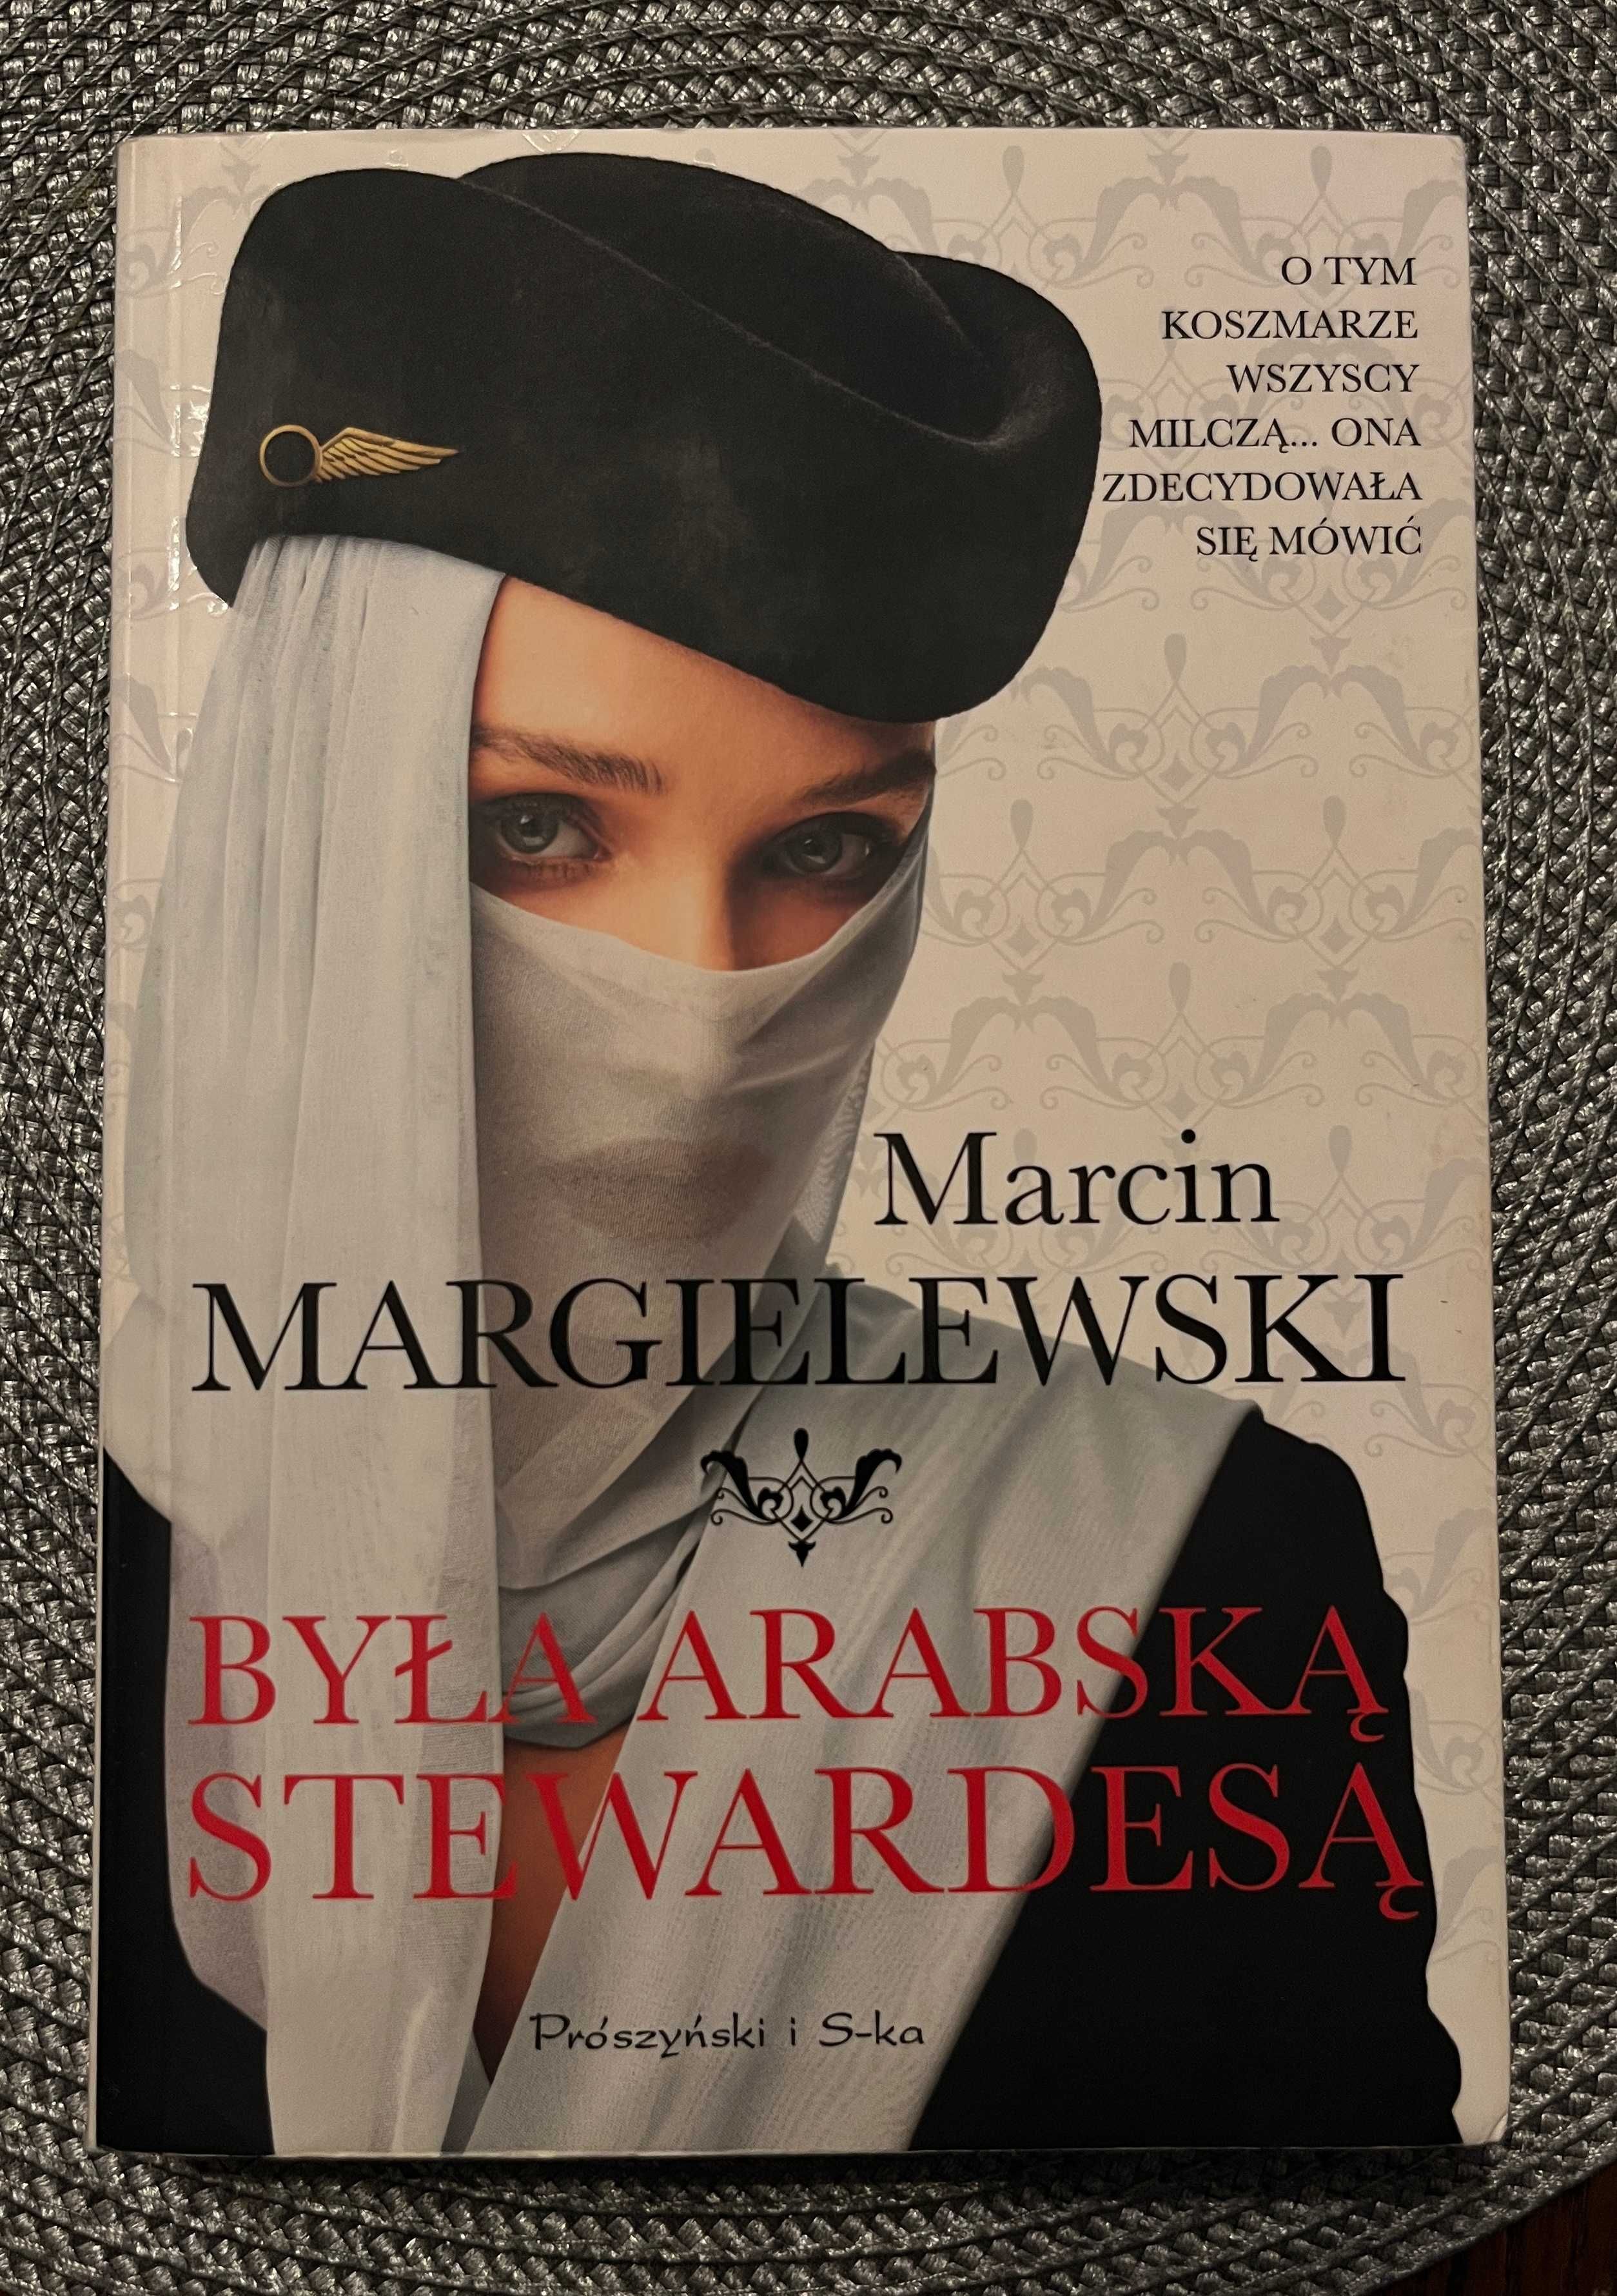 Książki: Shukri, Magrielewski